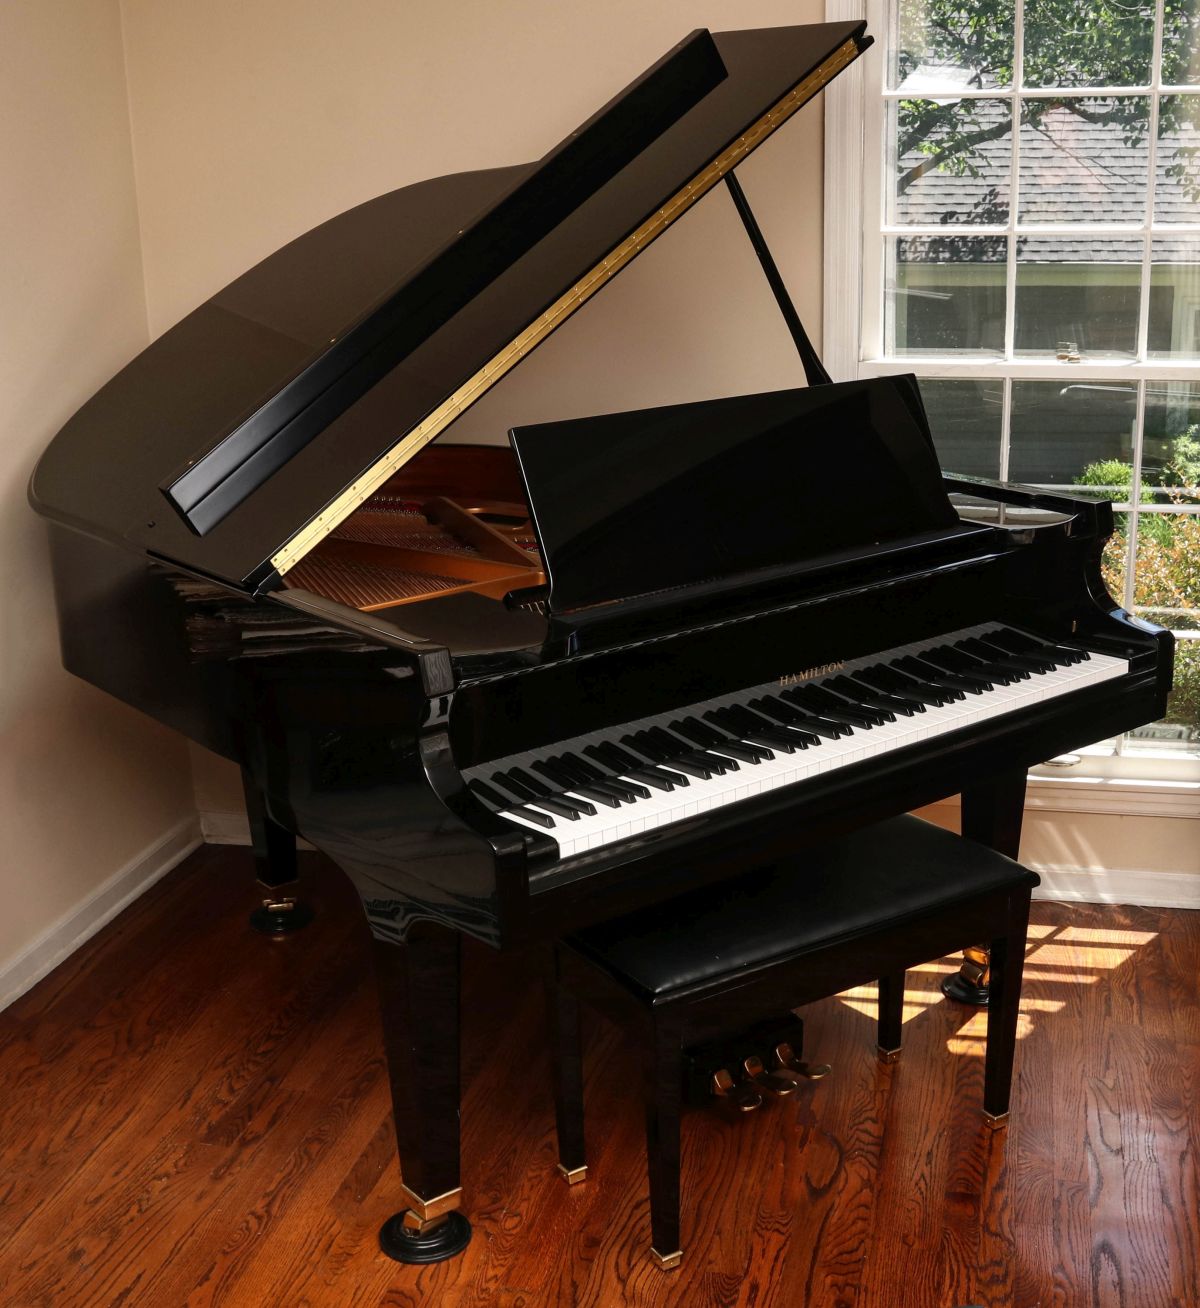 A HAMILTON by BALDWIN MODEL H399 BABY GRAND PIANO